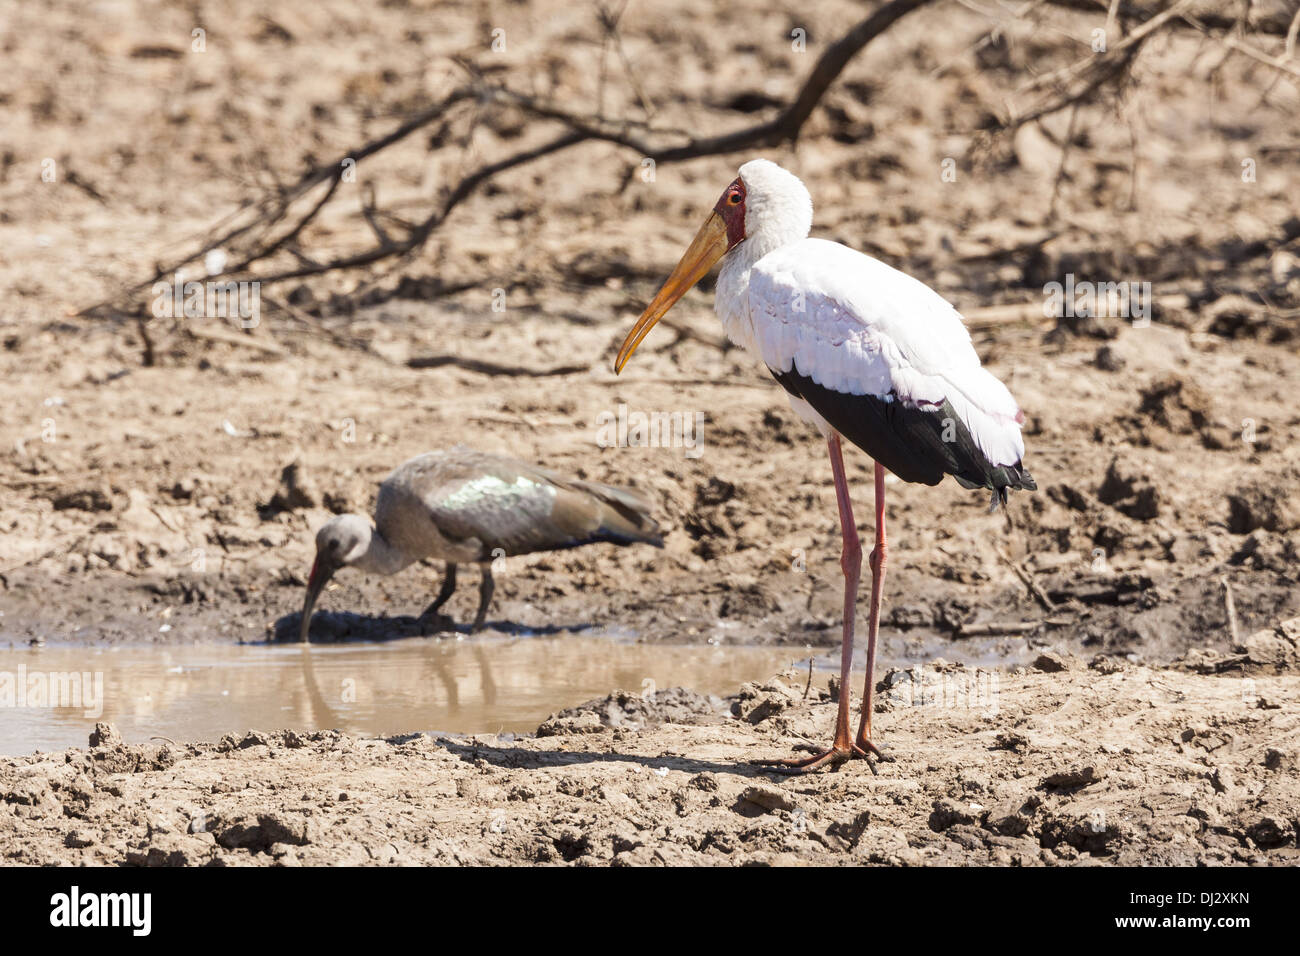 Fame (Mycteria ibis) Foto Stock